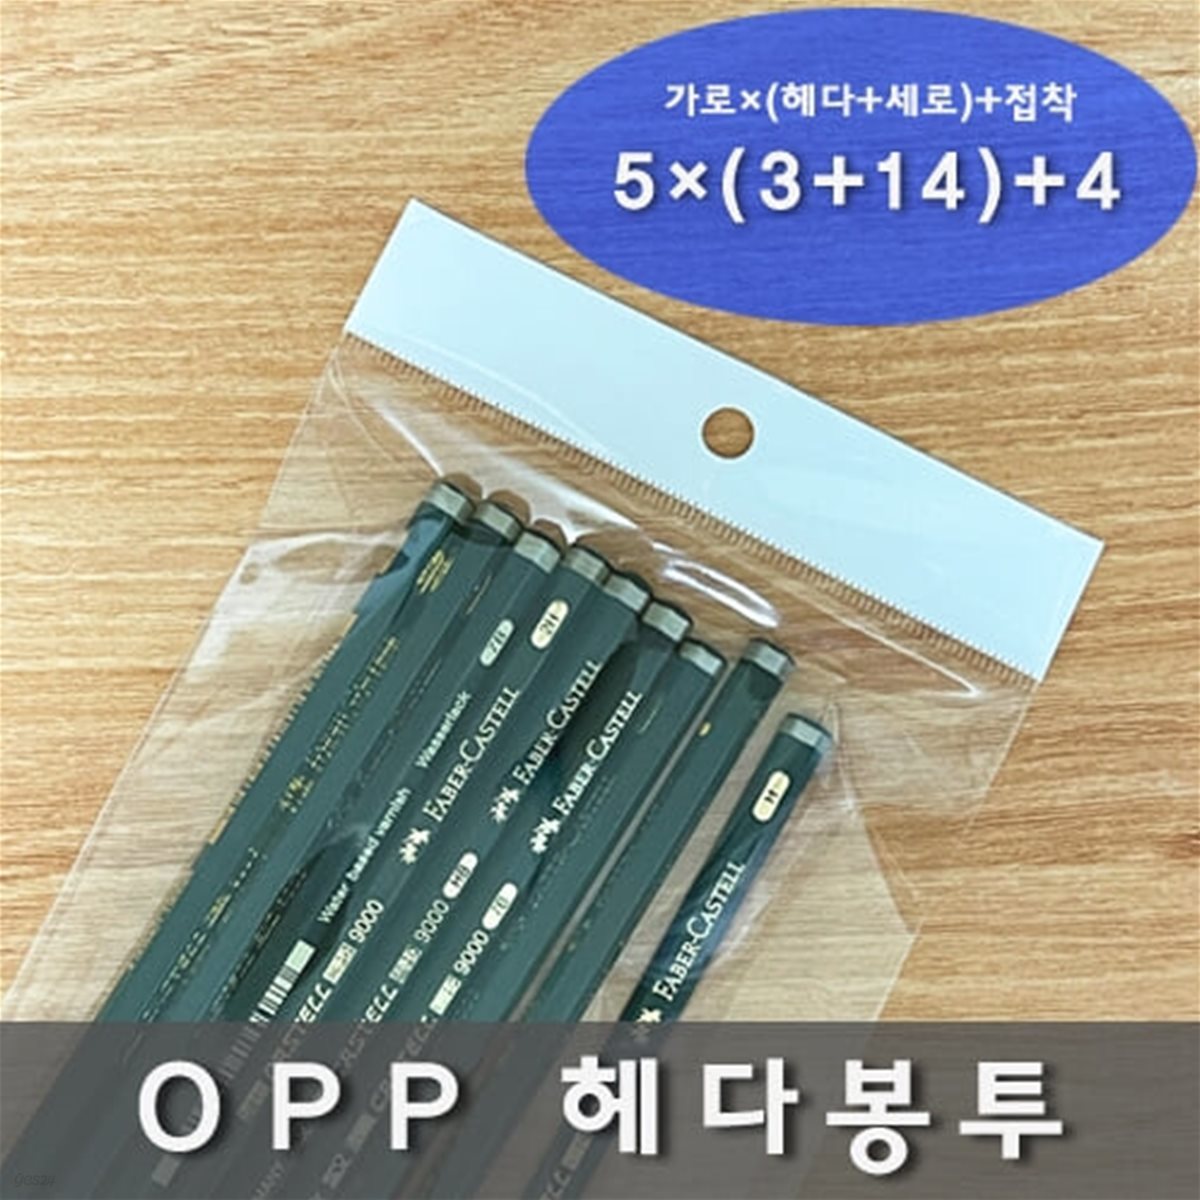 OPP 헤다봉투 5×(3+14)+4 200매